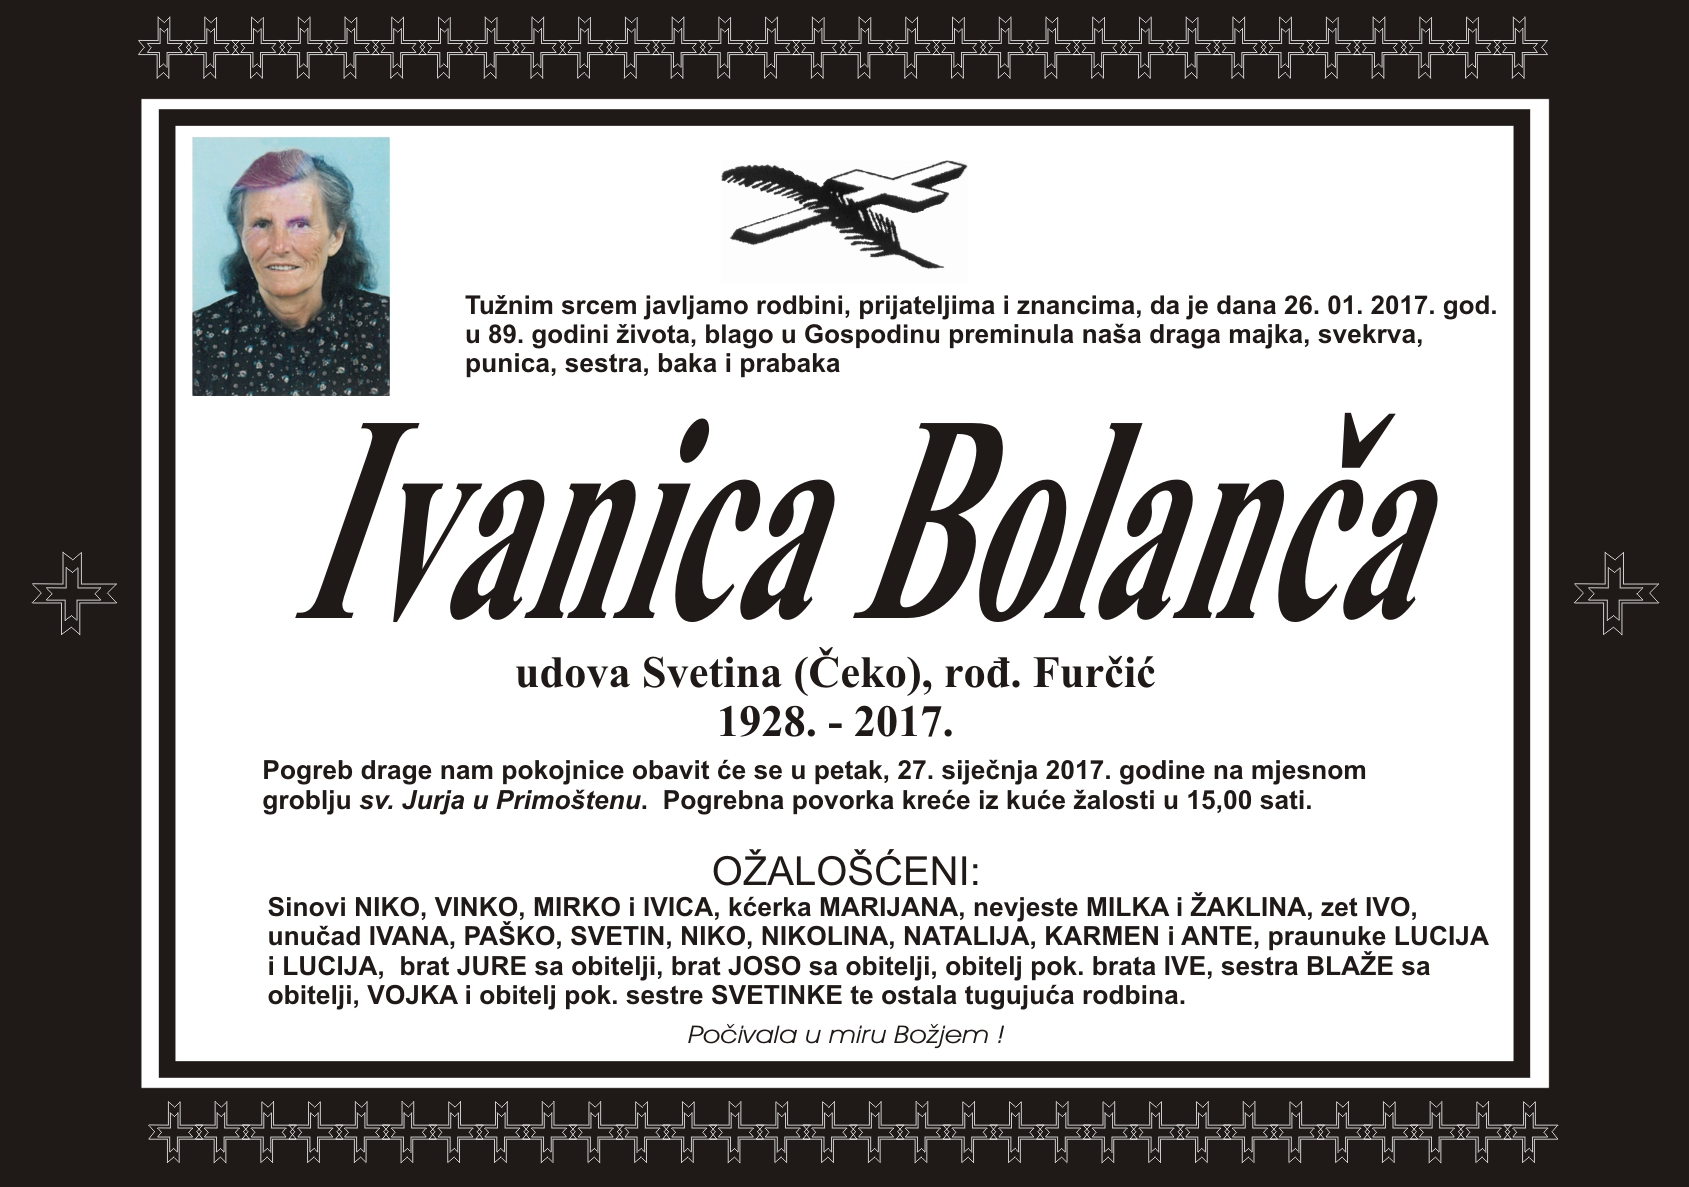 Umrla Ivanica Bolanča